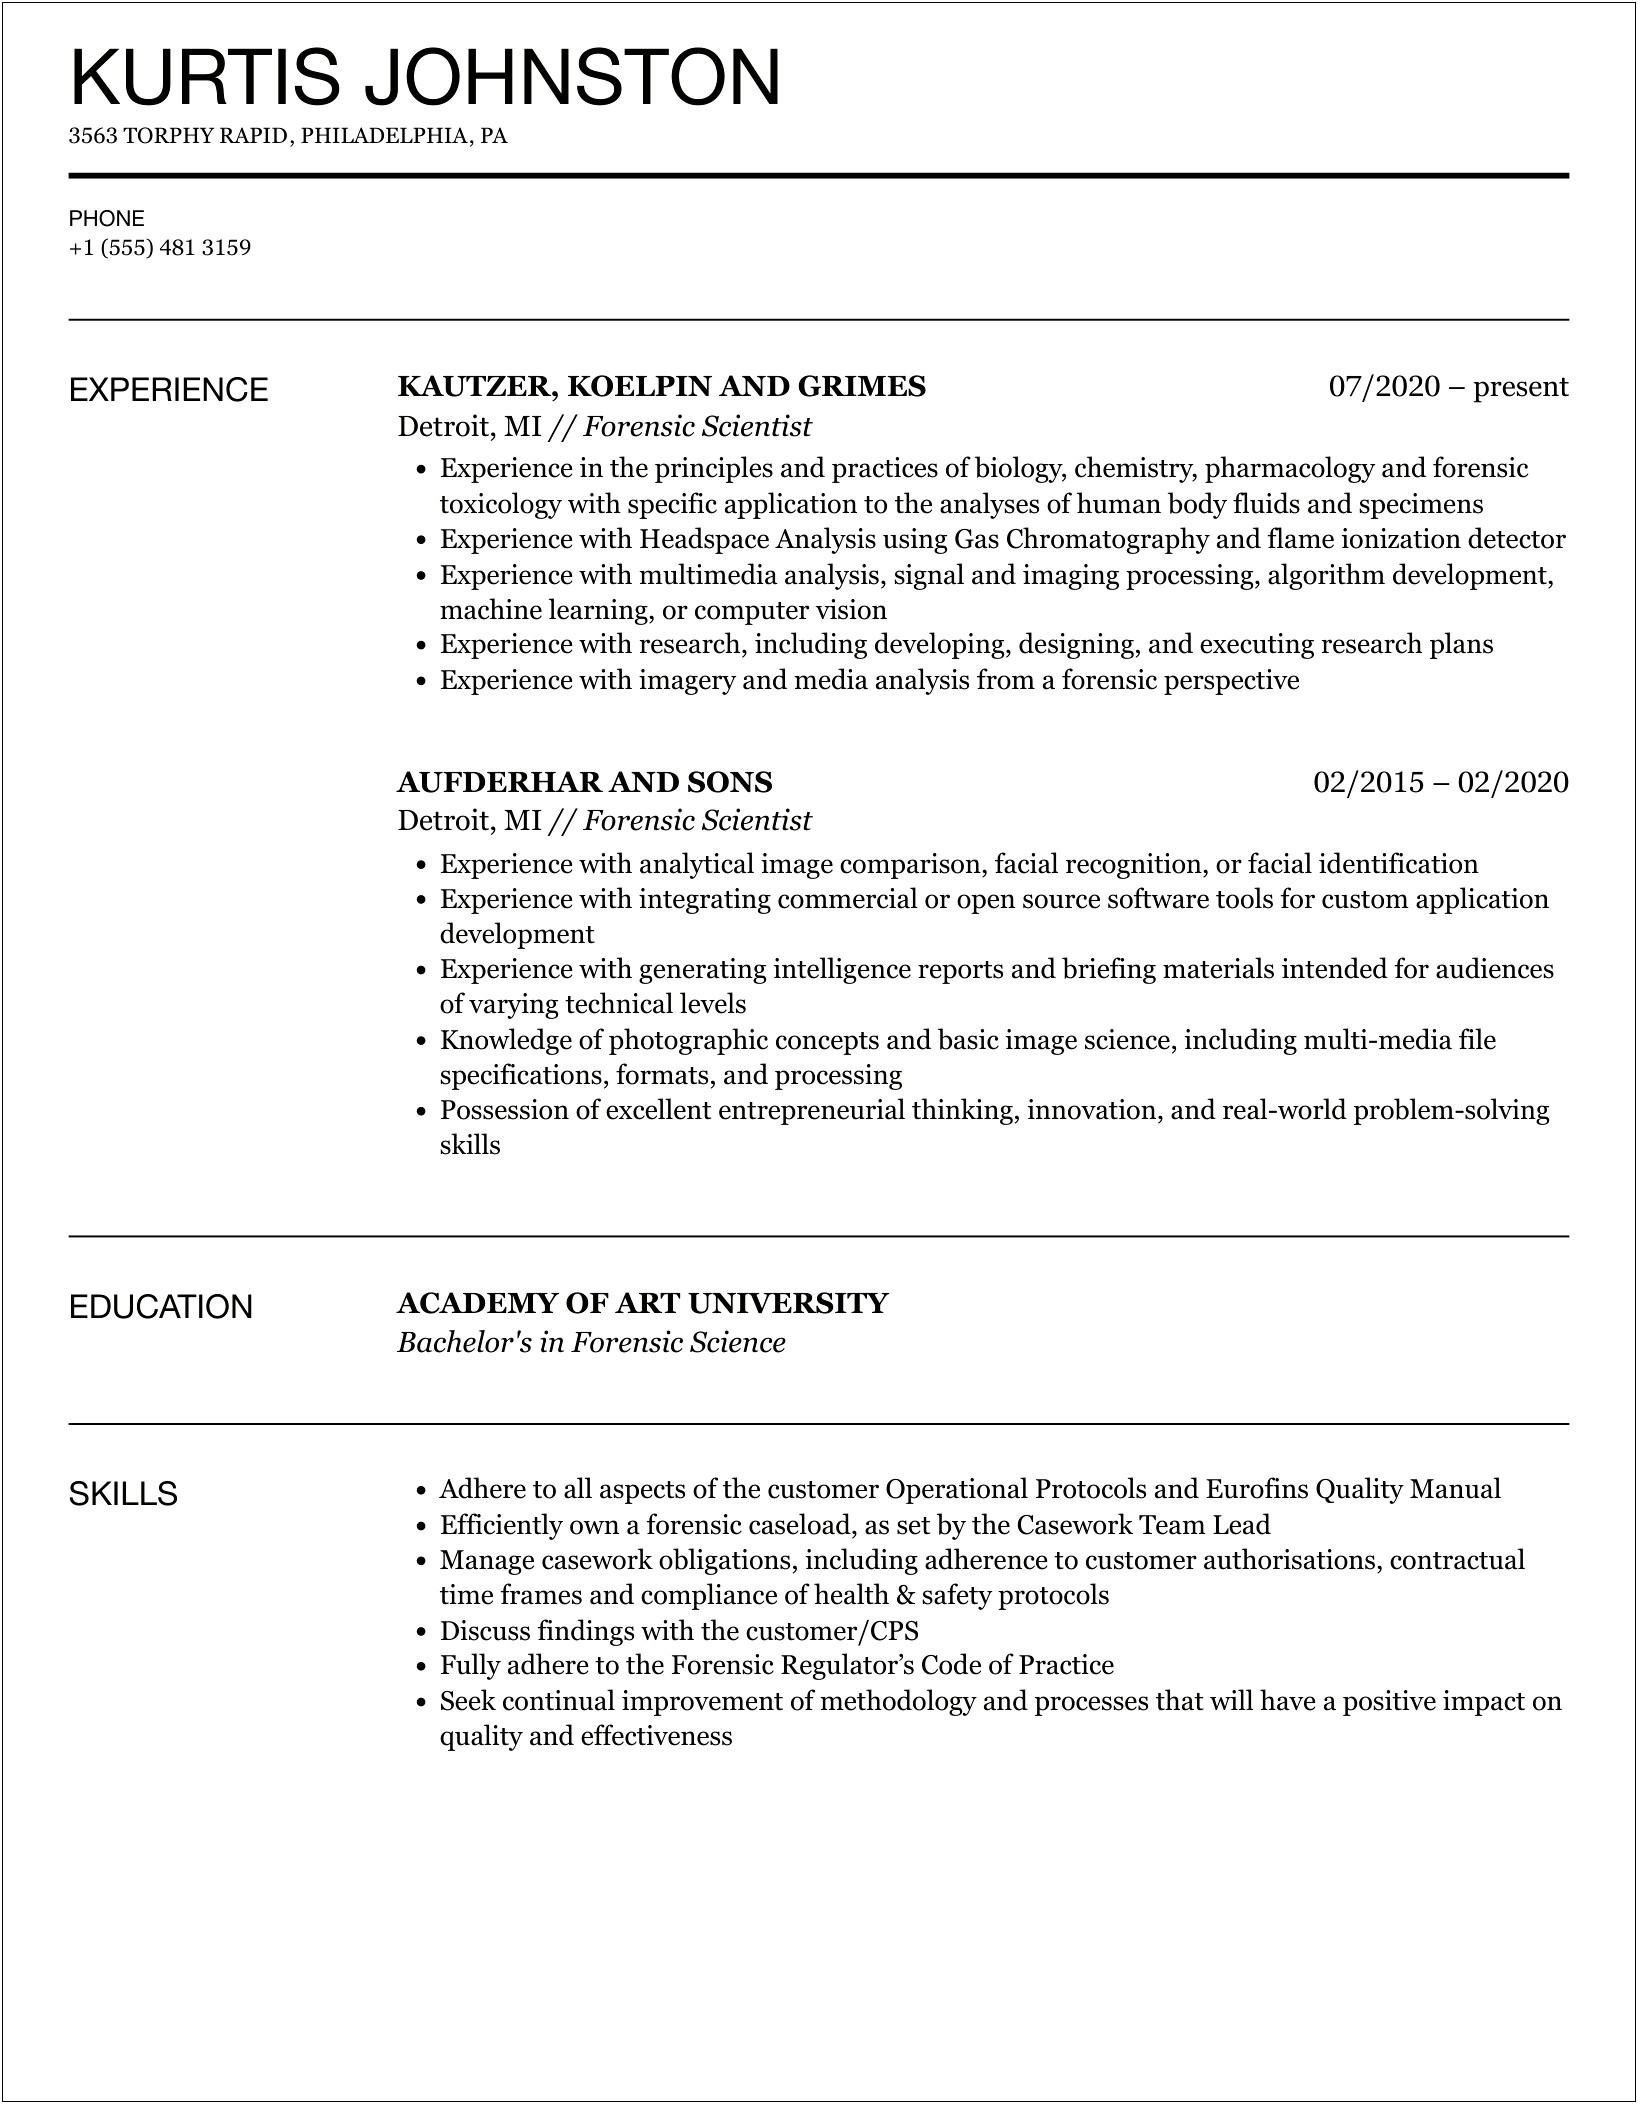 Resume Objective For Crime Scene Technician